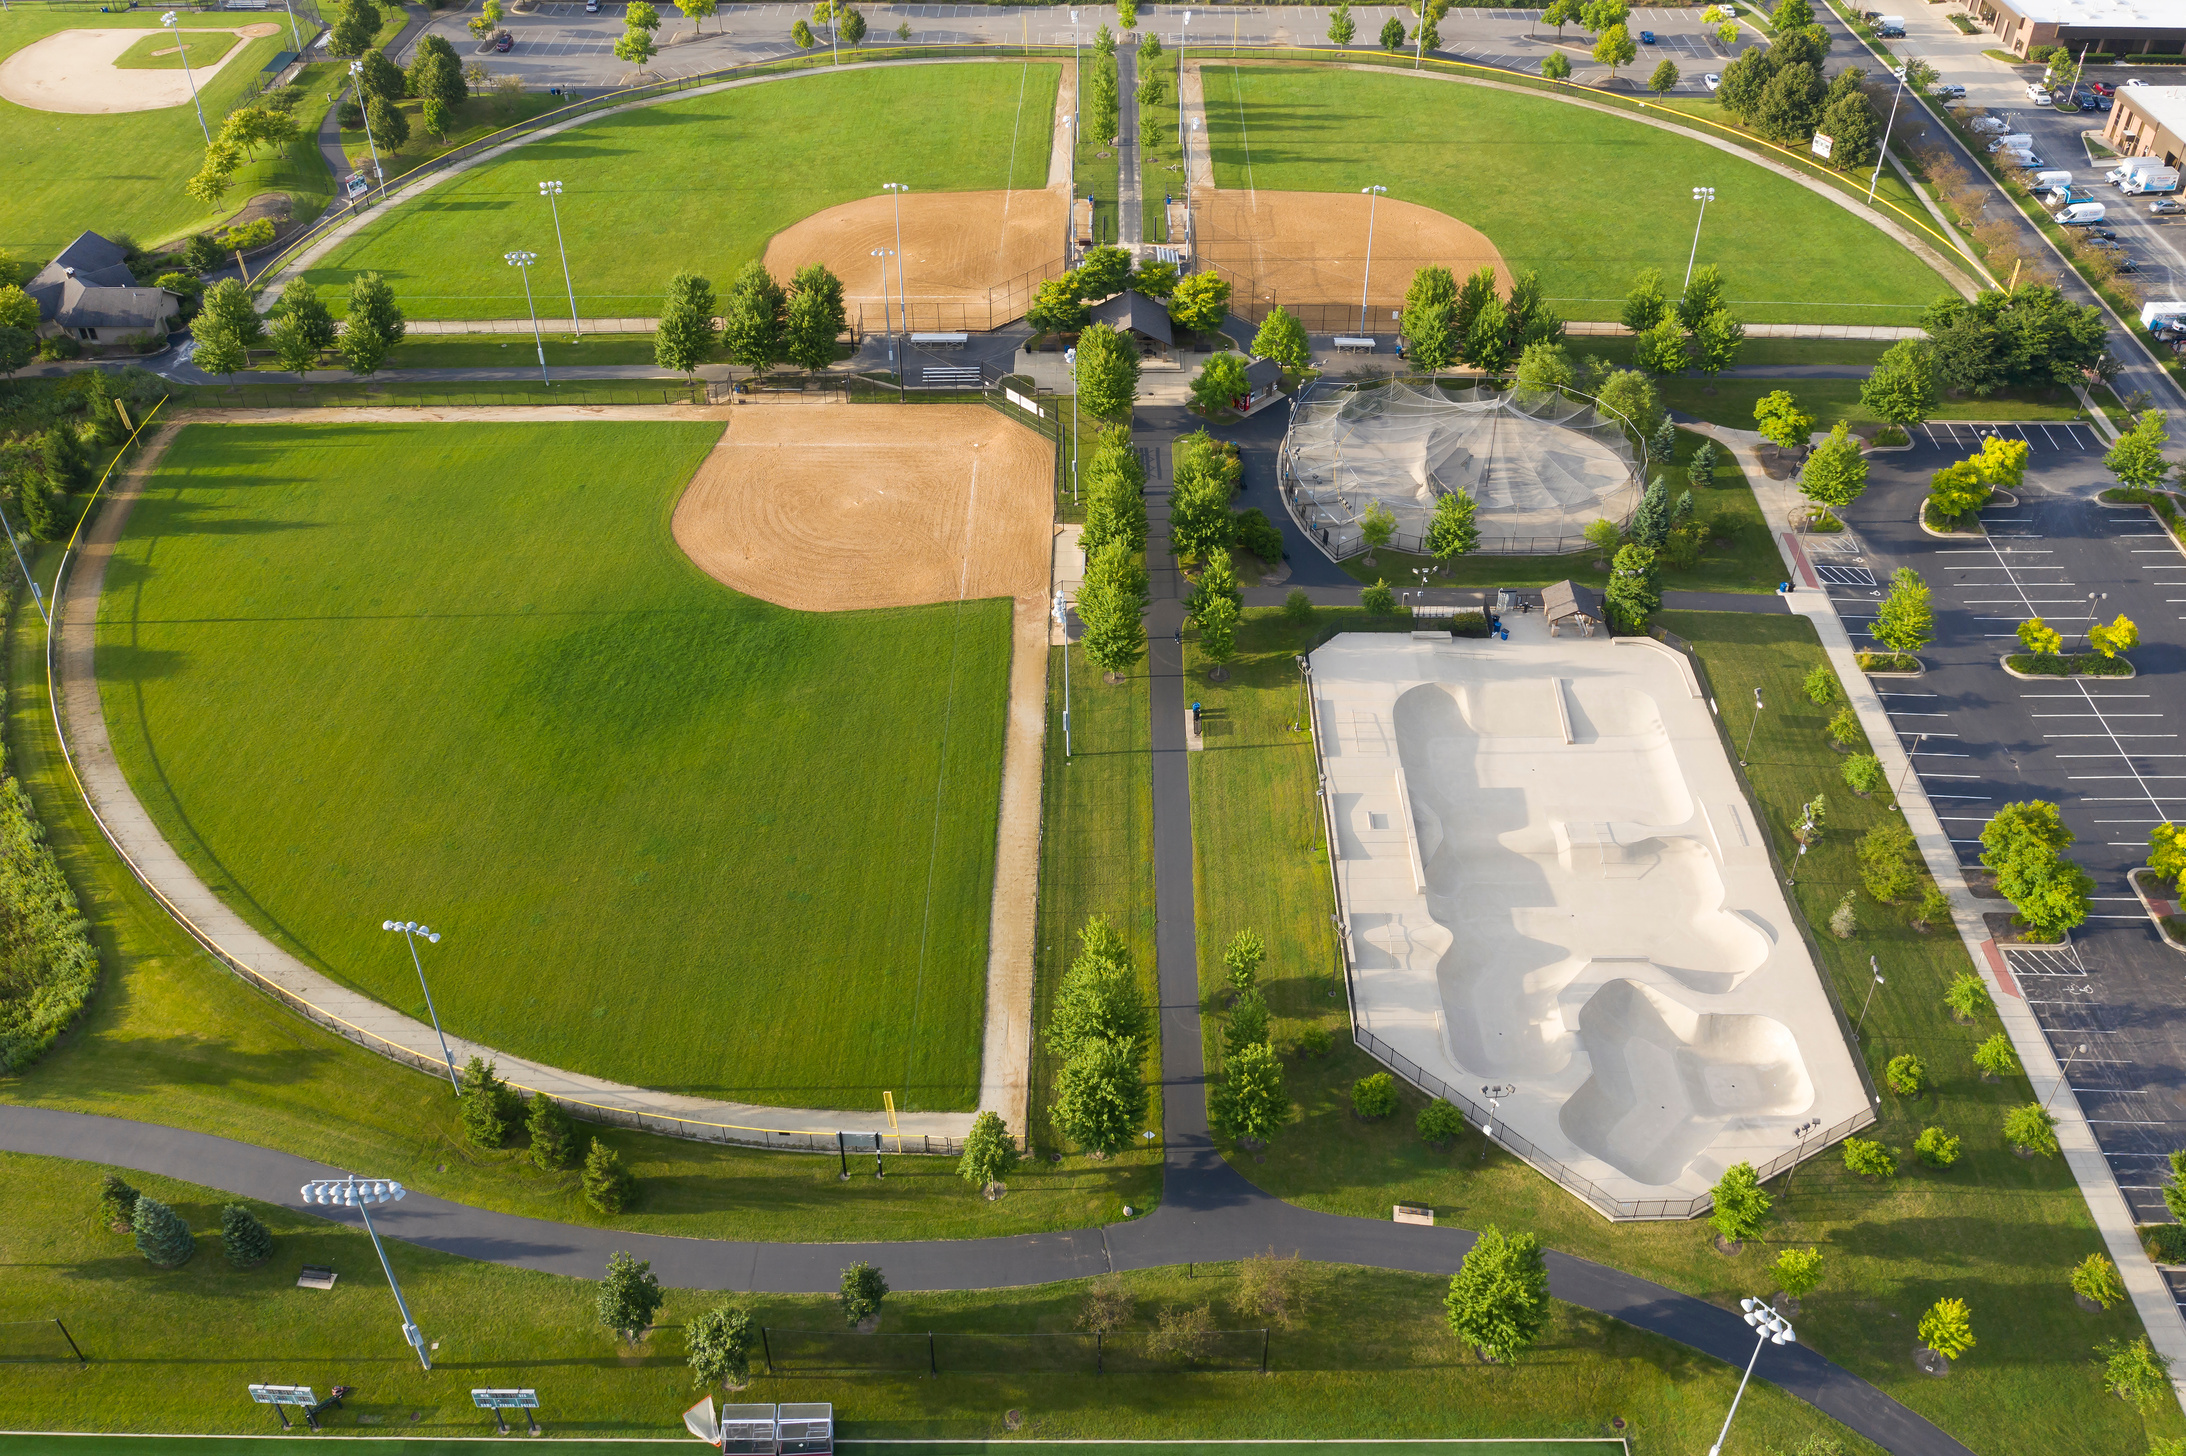 Aerial view of a suburban baseball/softball sports complex